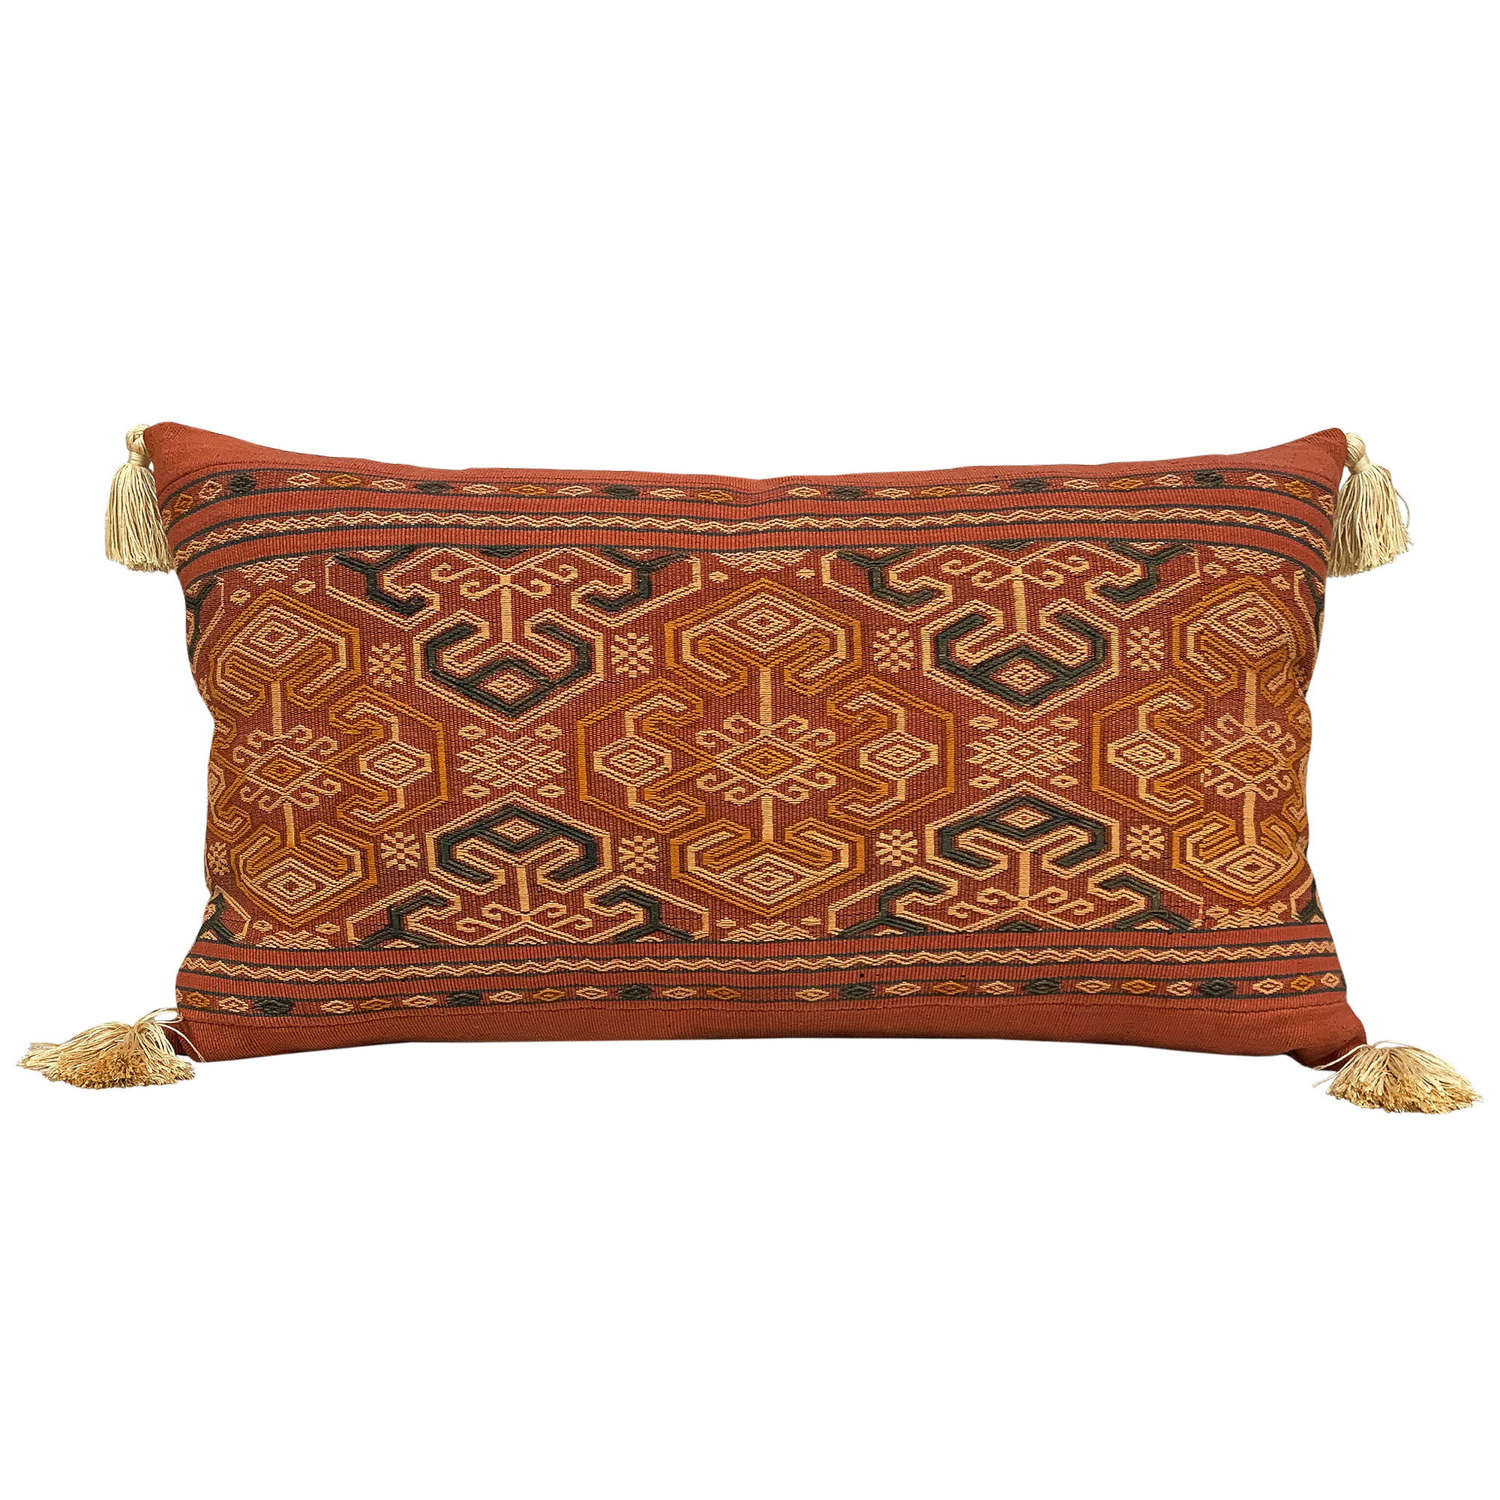 Sumba pahikung cushion with tassels